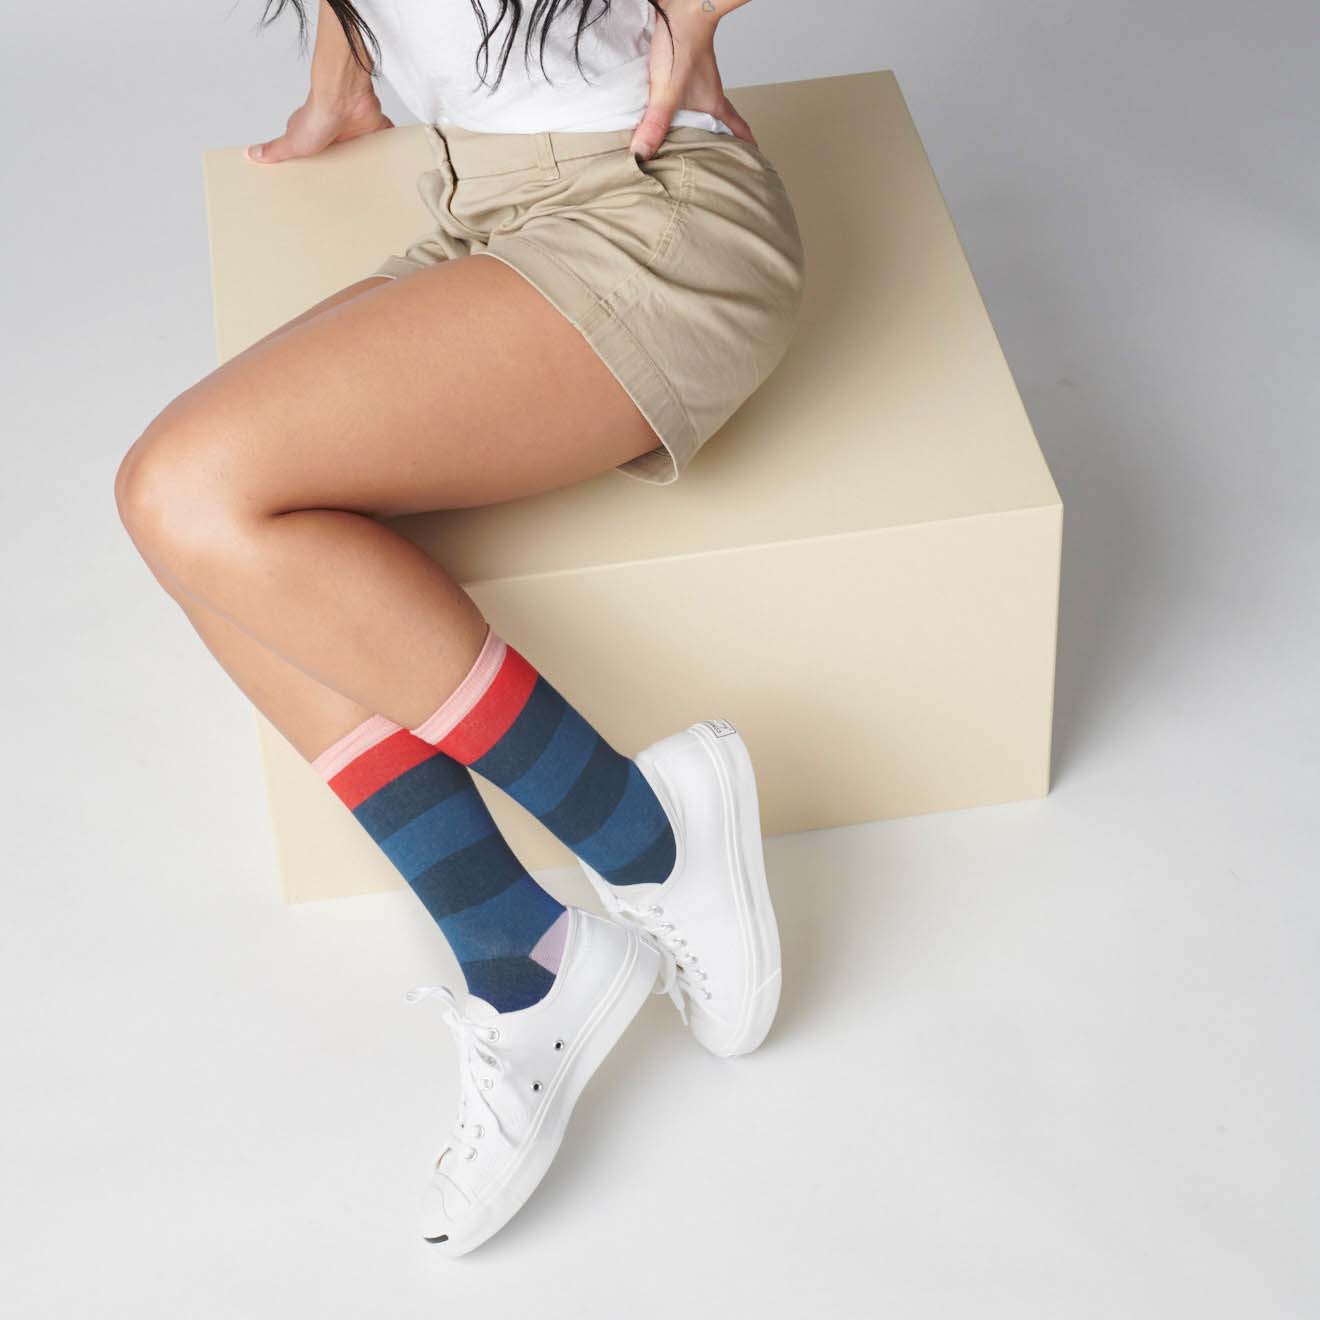 Hooray Sock Co.'s Fillmore Crew Socks: Lightweight & Comfy. Bold blue stripes & signature bars. Crew-length. 80% cotton, 20% spandex. Unisex. Made in South Korea. Large (Men's 8-12) Small (Women's 4-10).